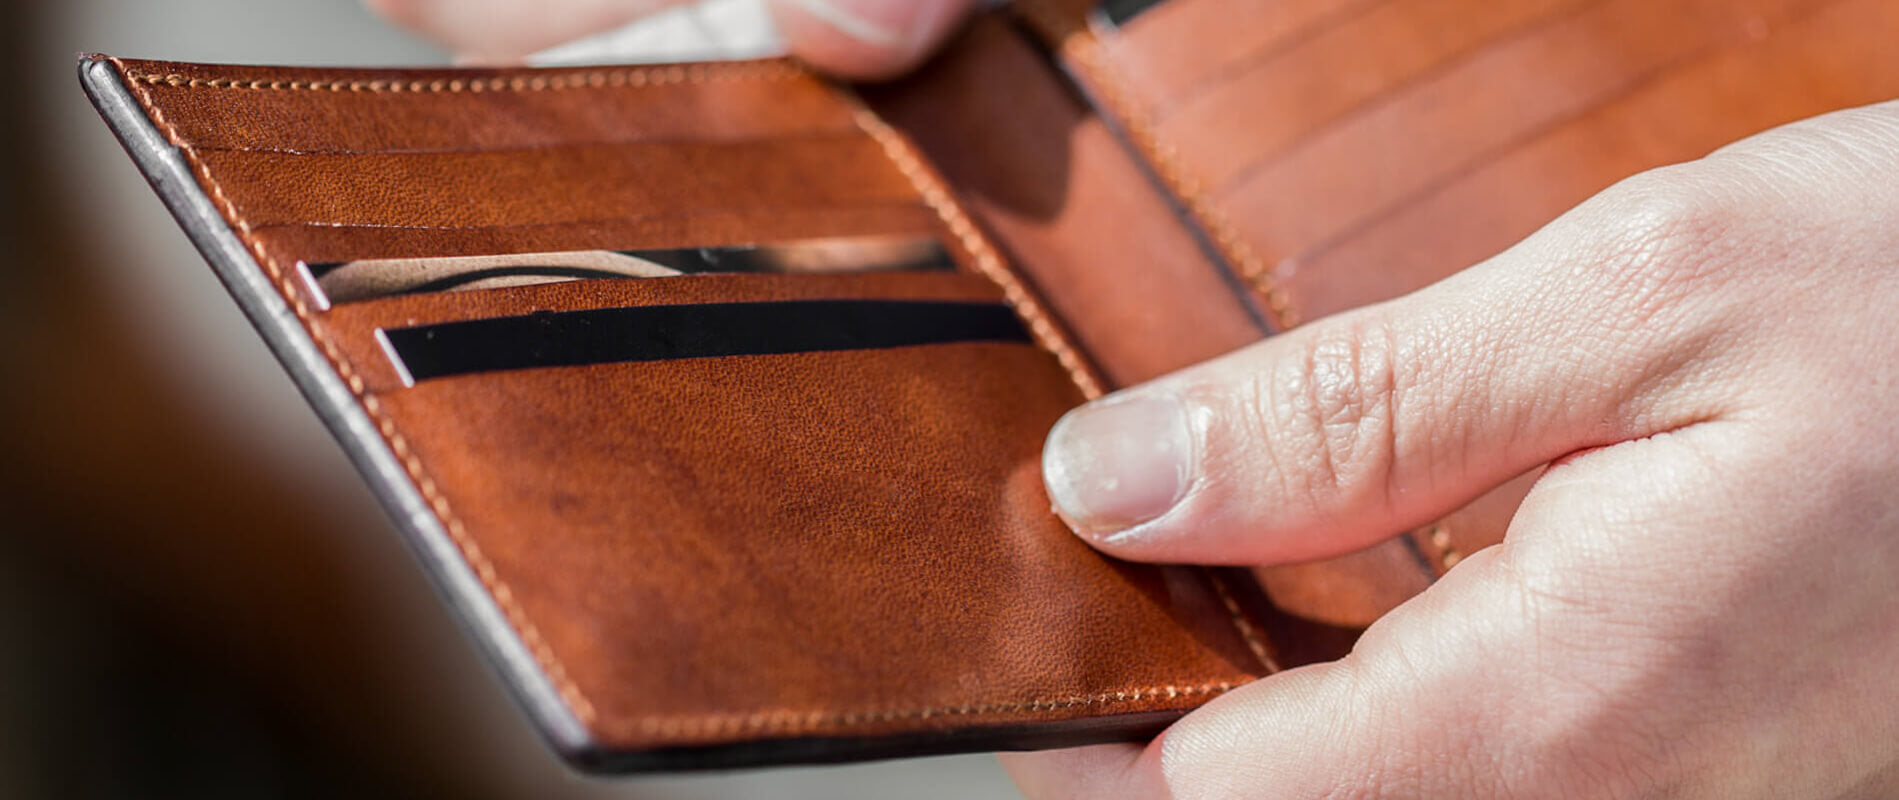 Best Leather Wallet For Men Tan By Gentleman | Buy Wallets @200